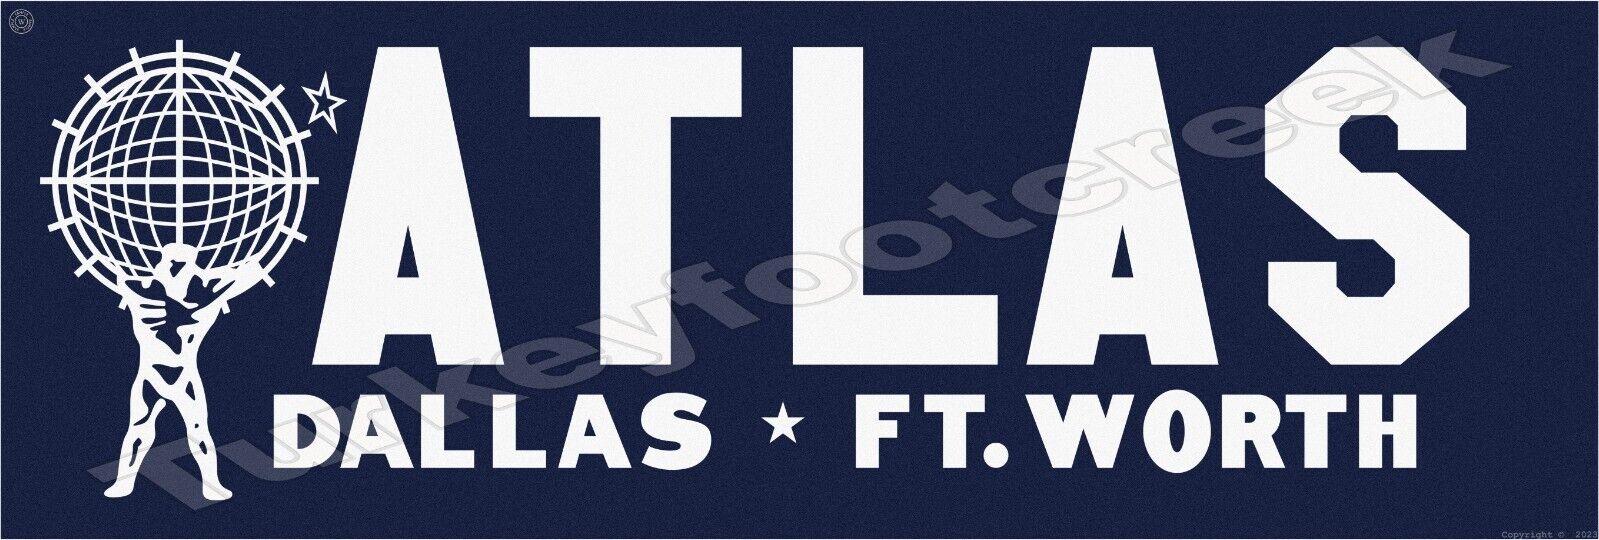 Atlas Dallas * Ft. Worth 6\